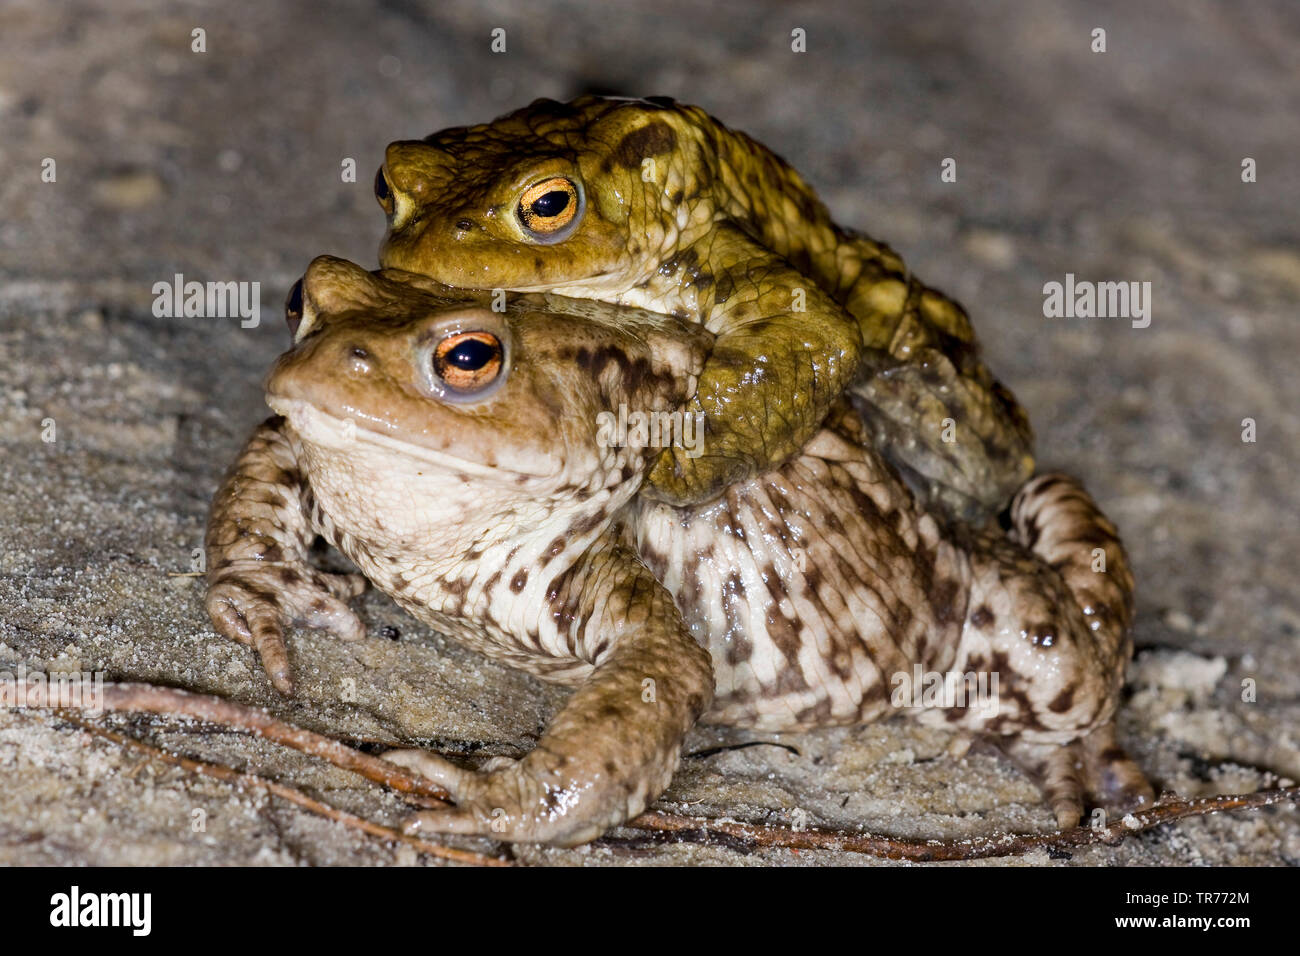 European common toad (Bufo bufo), Amplexus axillaris, side view, Netherlands Stock Photo